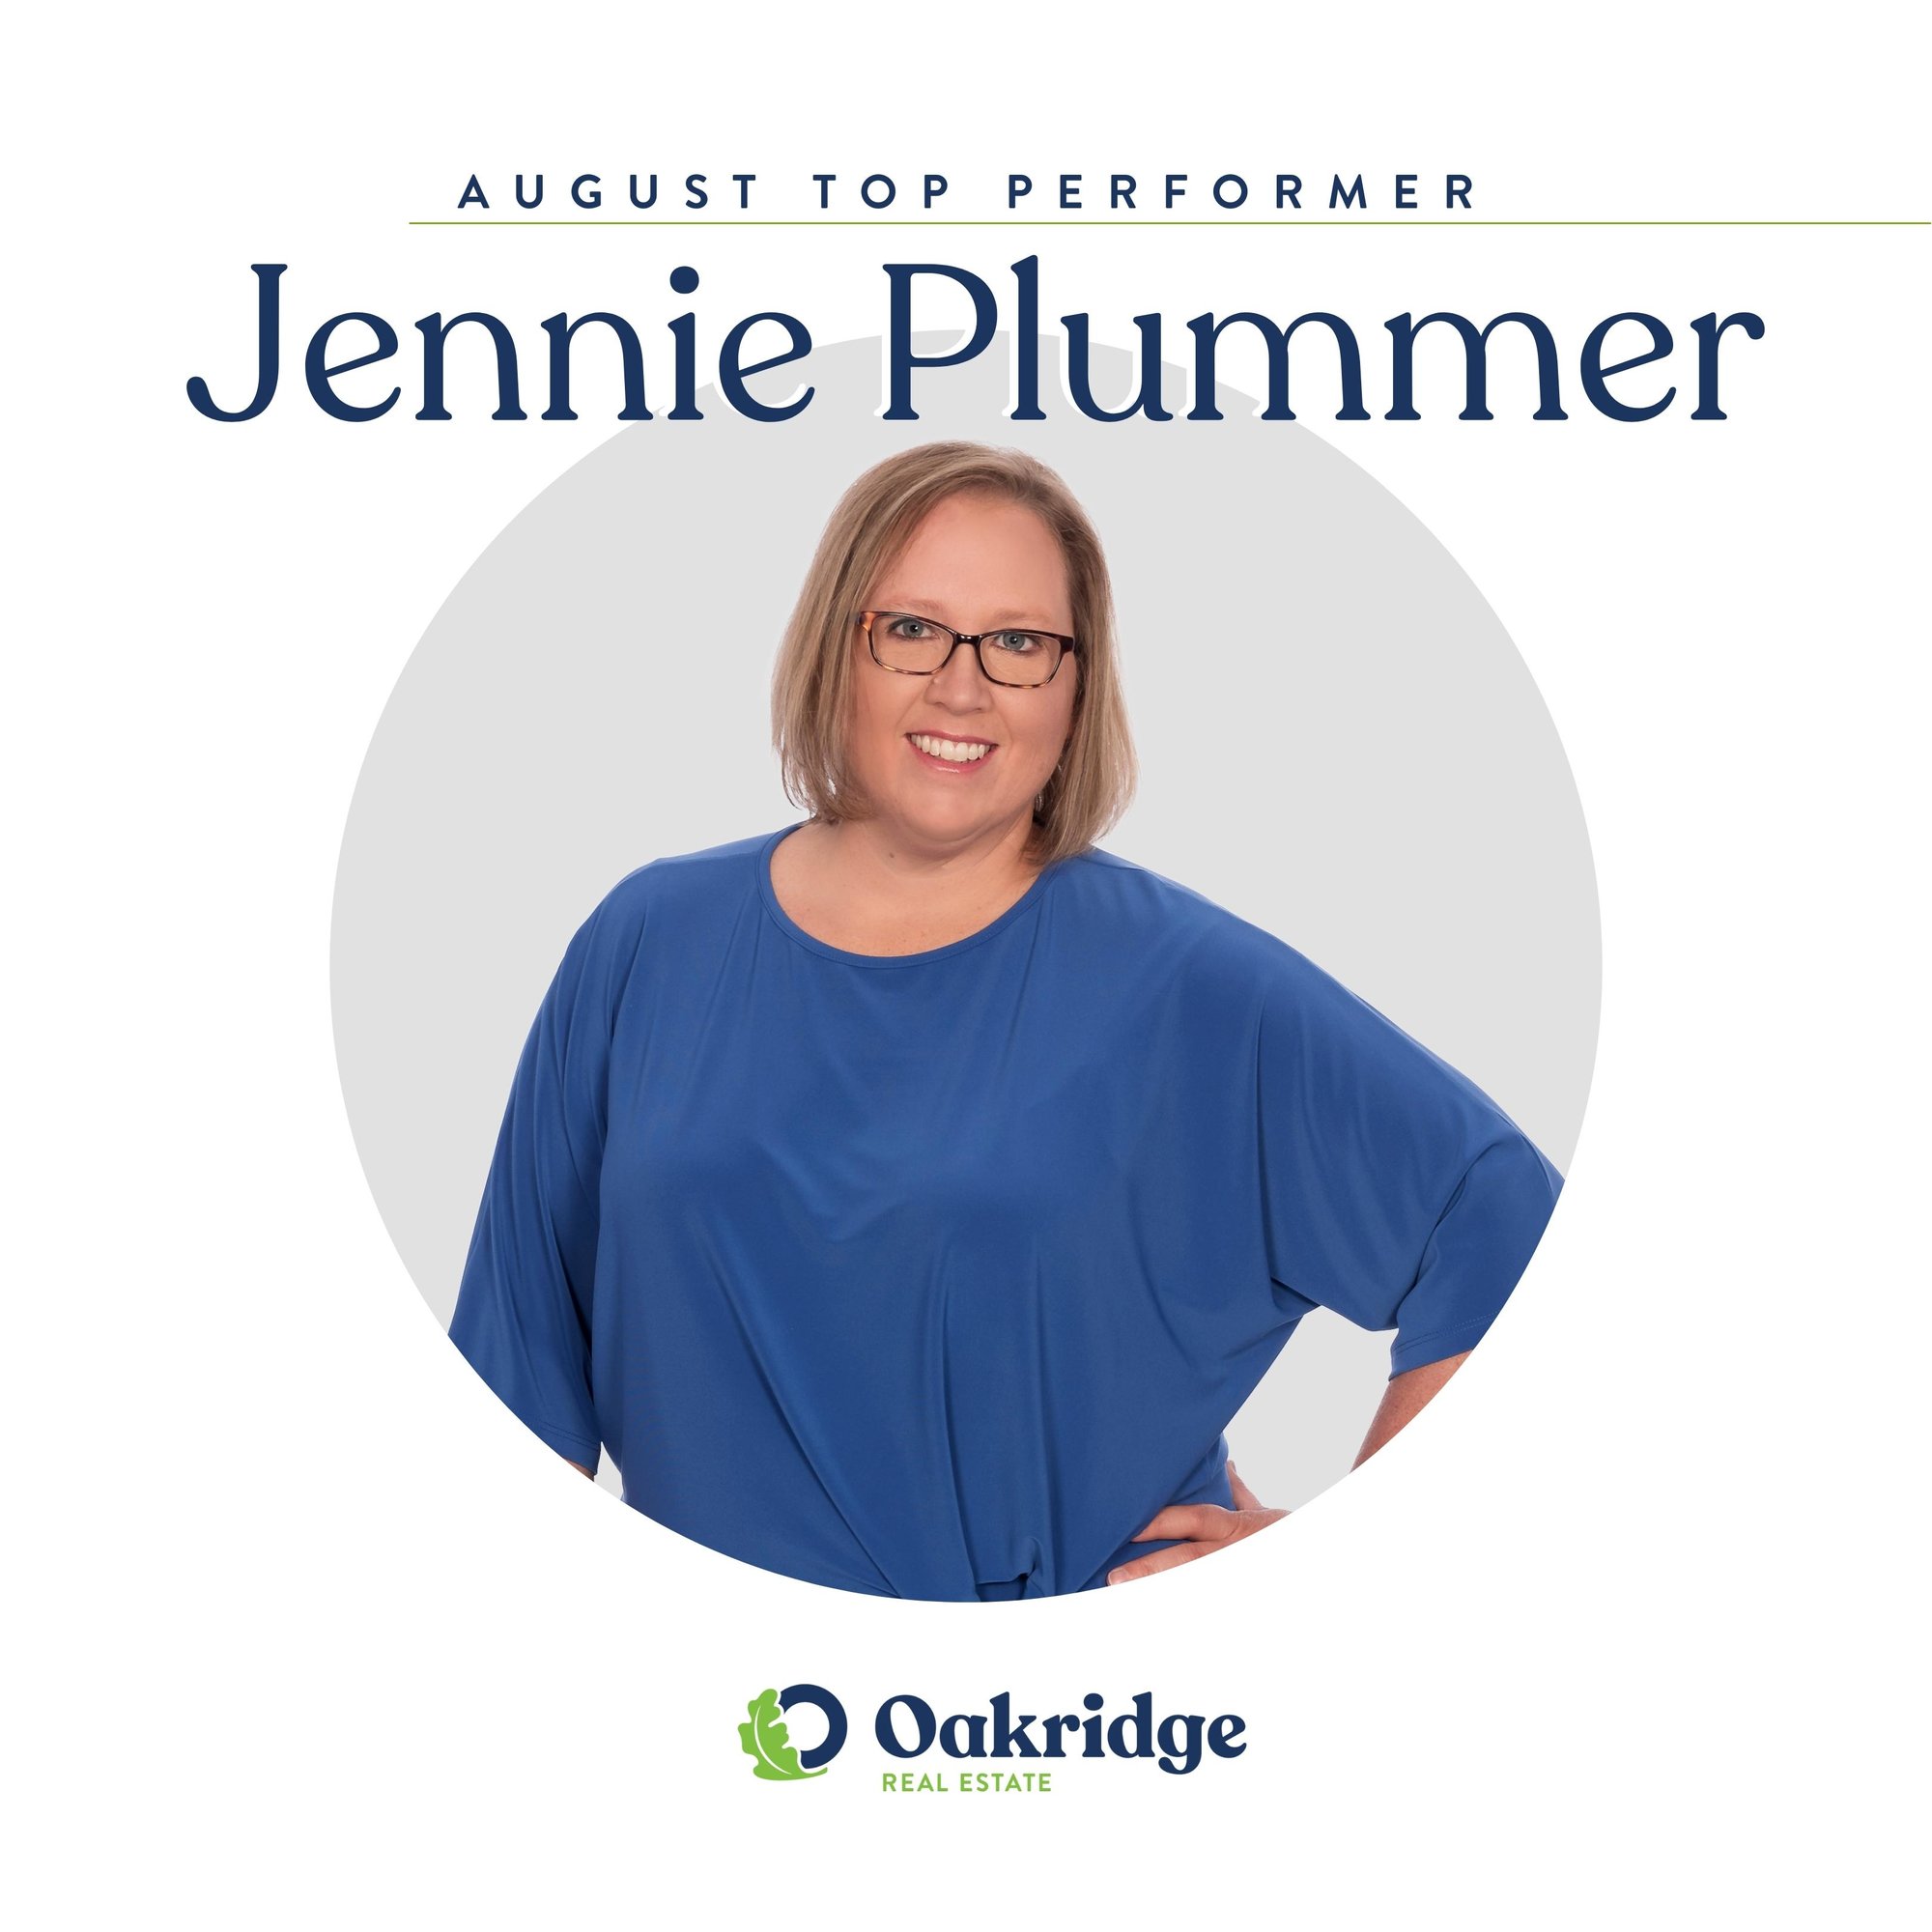 Jennie Plummer Oakridge Real Estate Top Performer